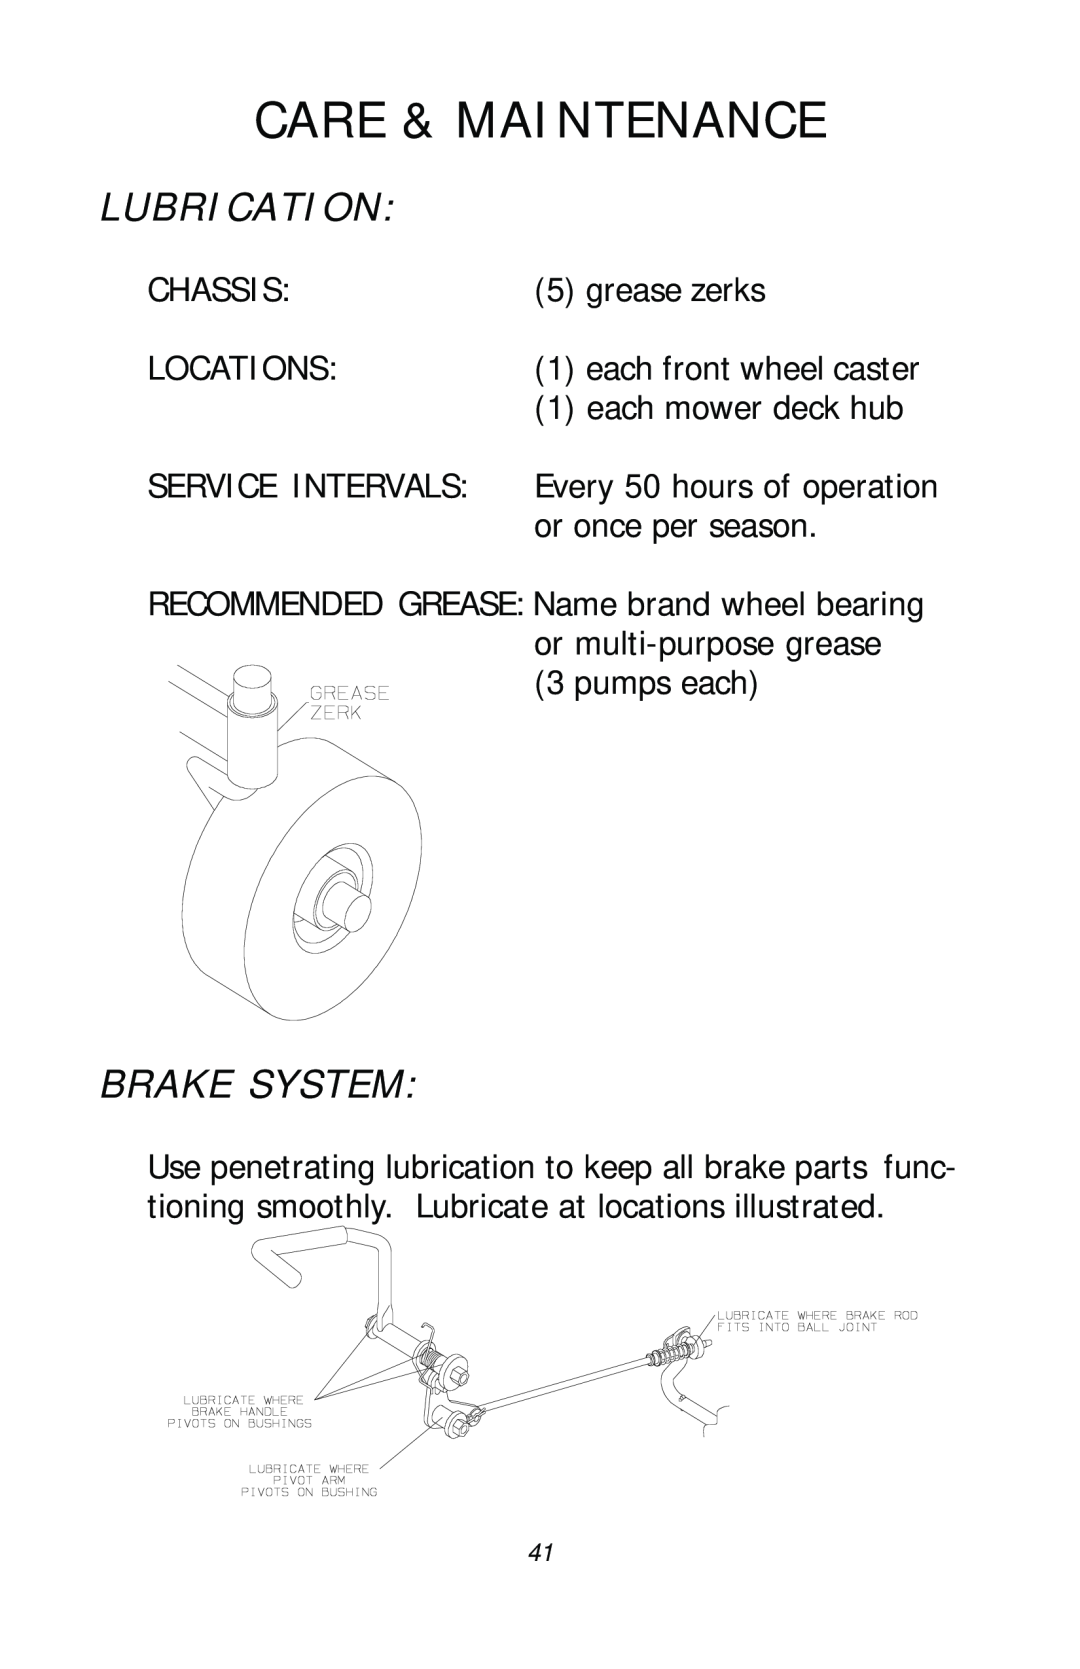 Dixon ZTR 4515, ZTR 4516, ZTR 4518, 13782-0503 manual Lubrication, Brake System, Care & Maintenance 